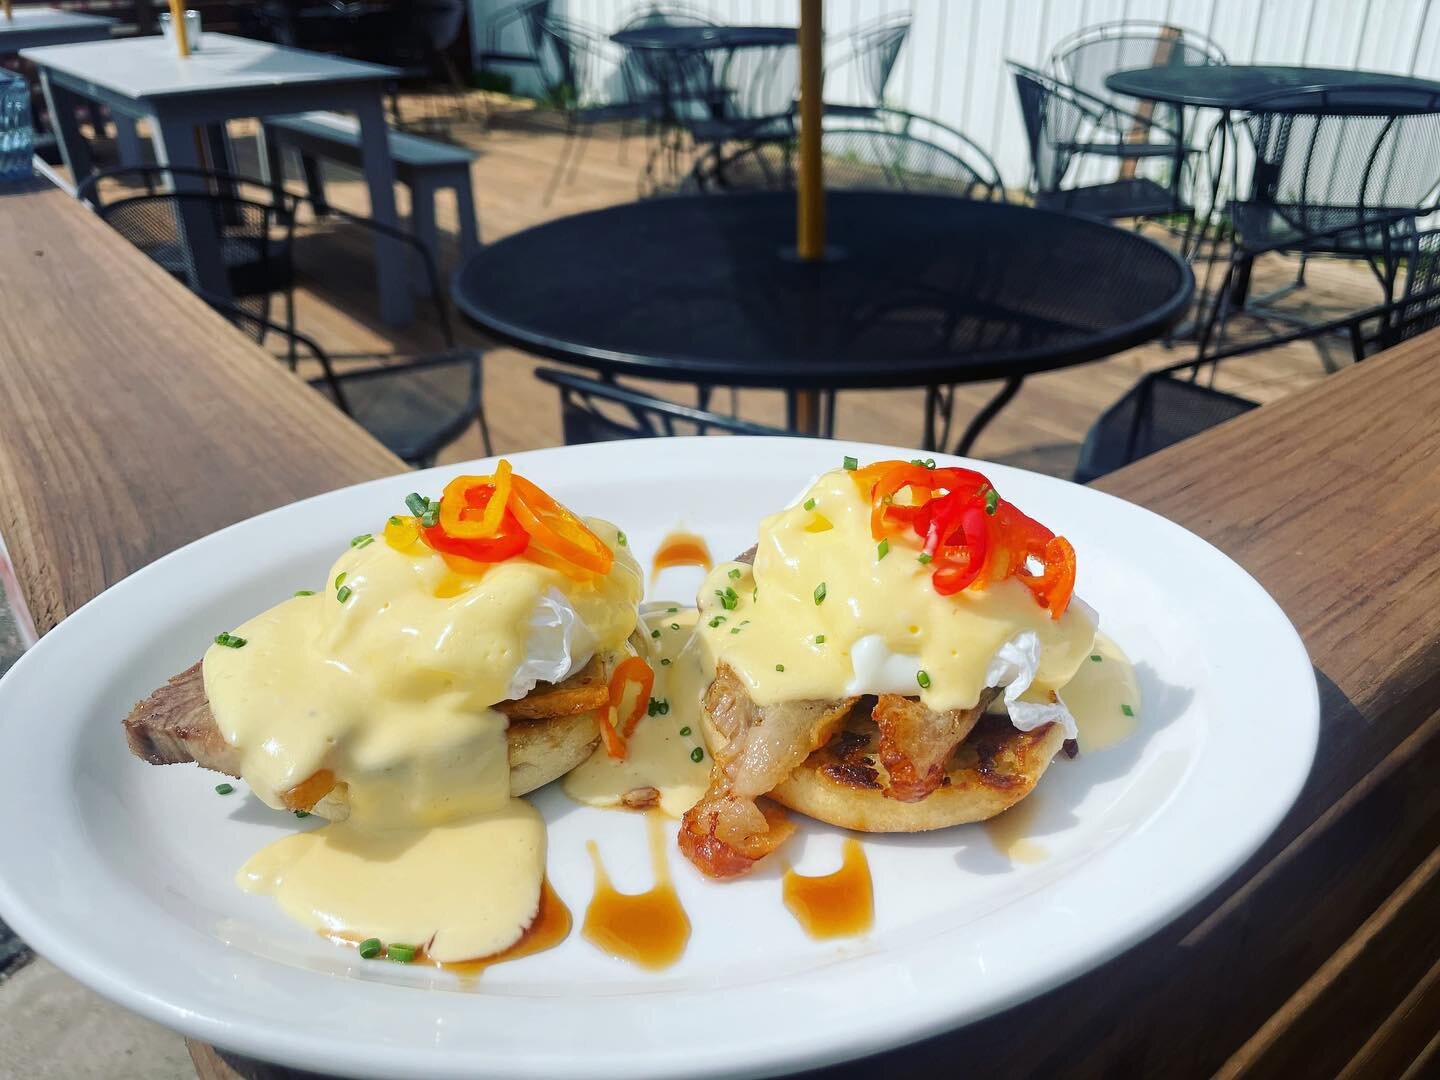 Pork Belly Eggs Benedict brunch special today! Serving breakfast until 2pm. Enjoy it on the deck!

#lakeeffectrestaurant #islandlake #eggsbenedict